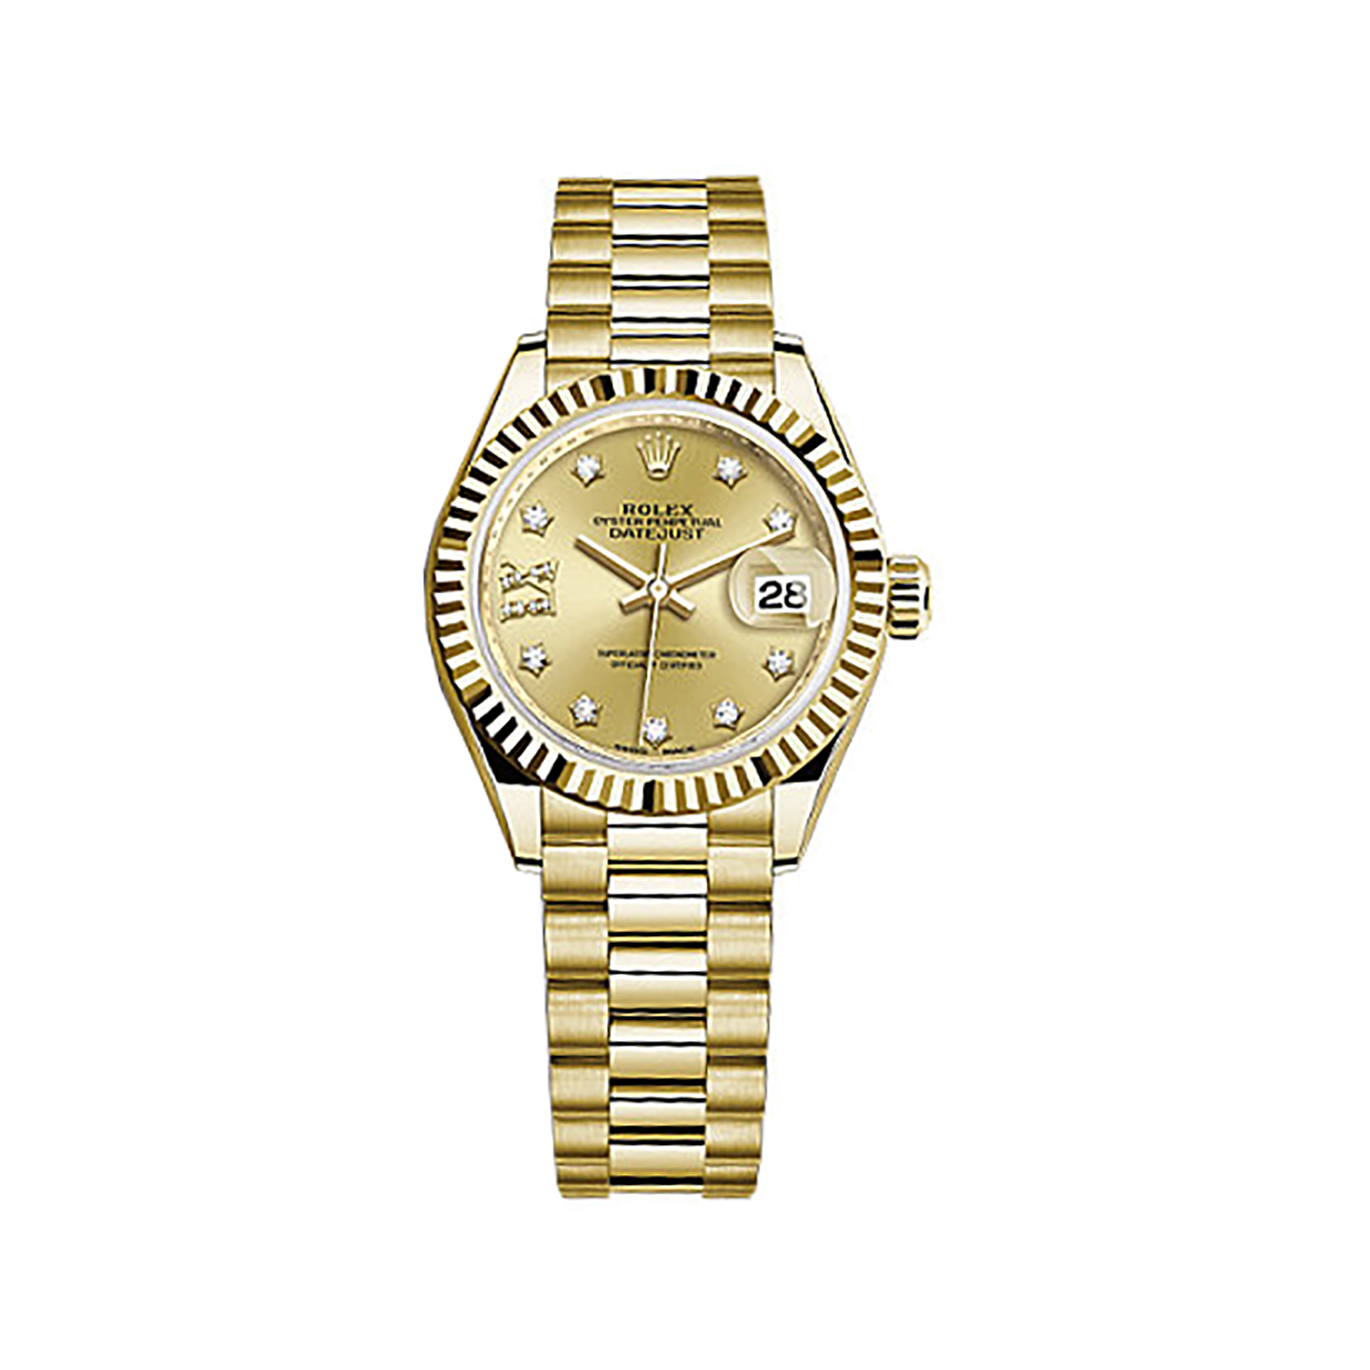 Lady-Datejust 28 279178 Gold Watch (Champagne Set with Diamonds)